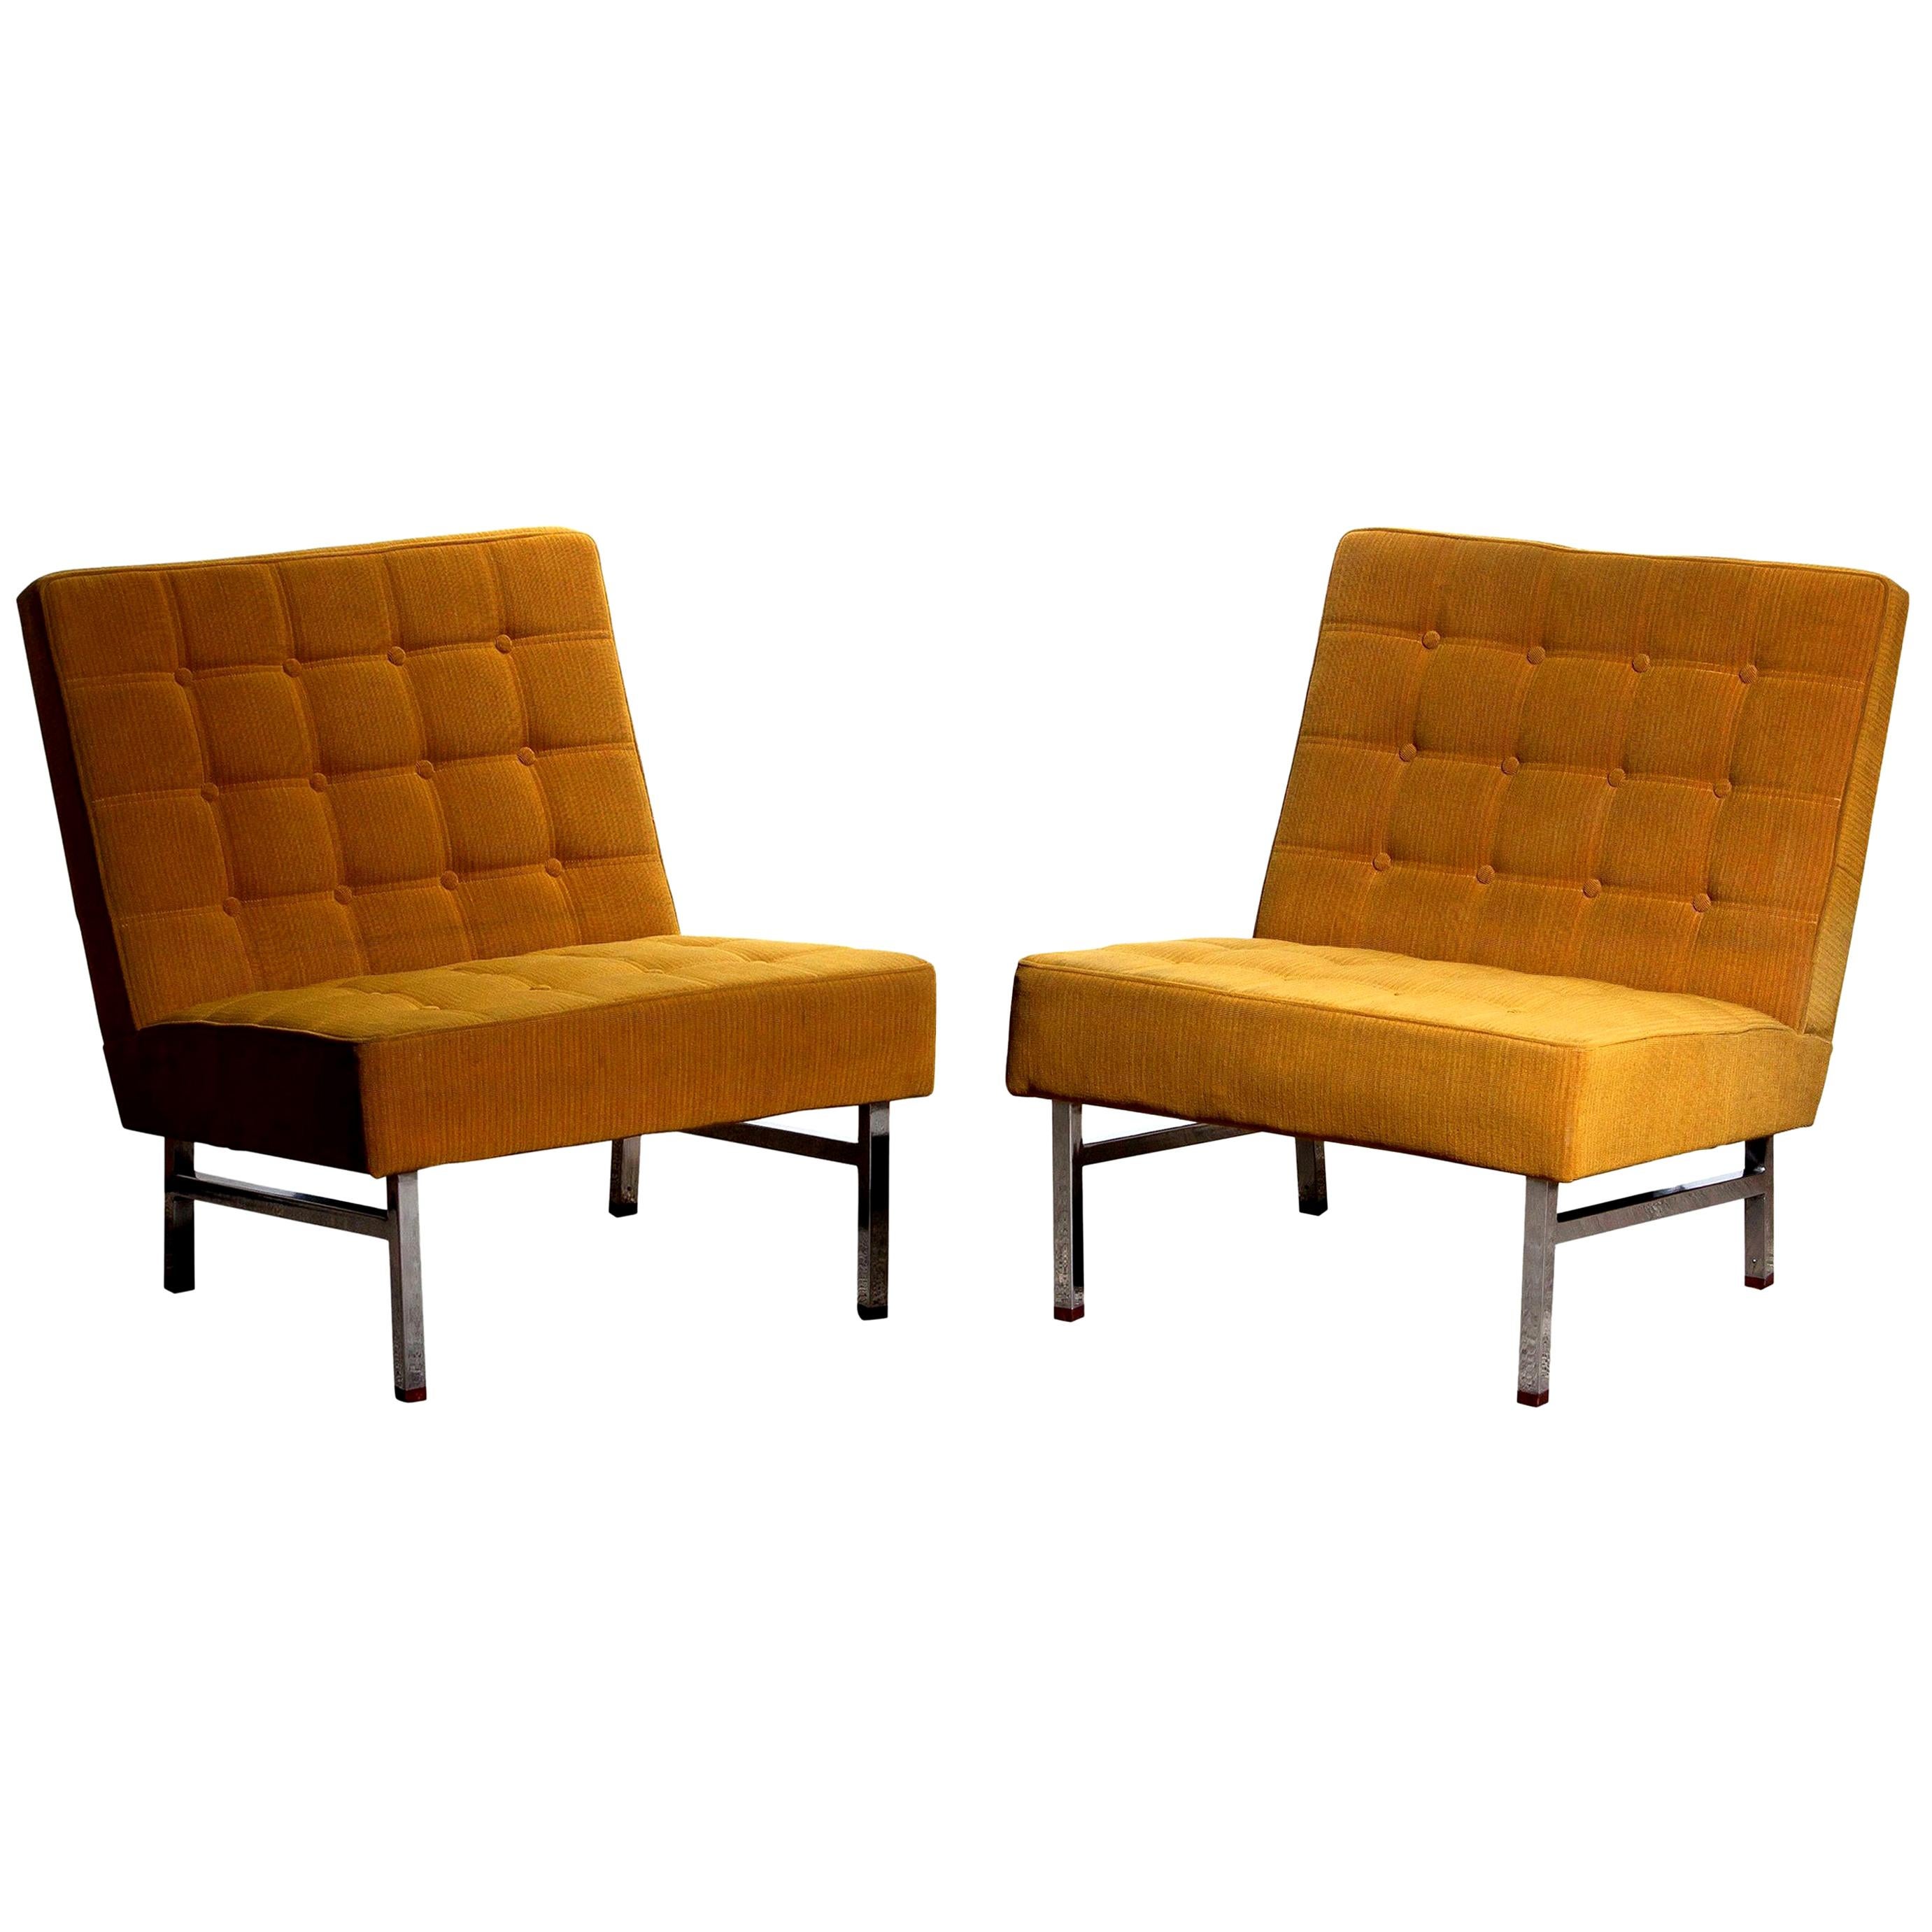 1960s Pair of Lounge or Easy Chairs by Karl Erik Ekselius for JOC Möbler, Sweden